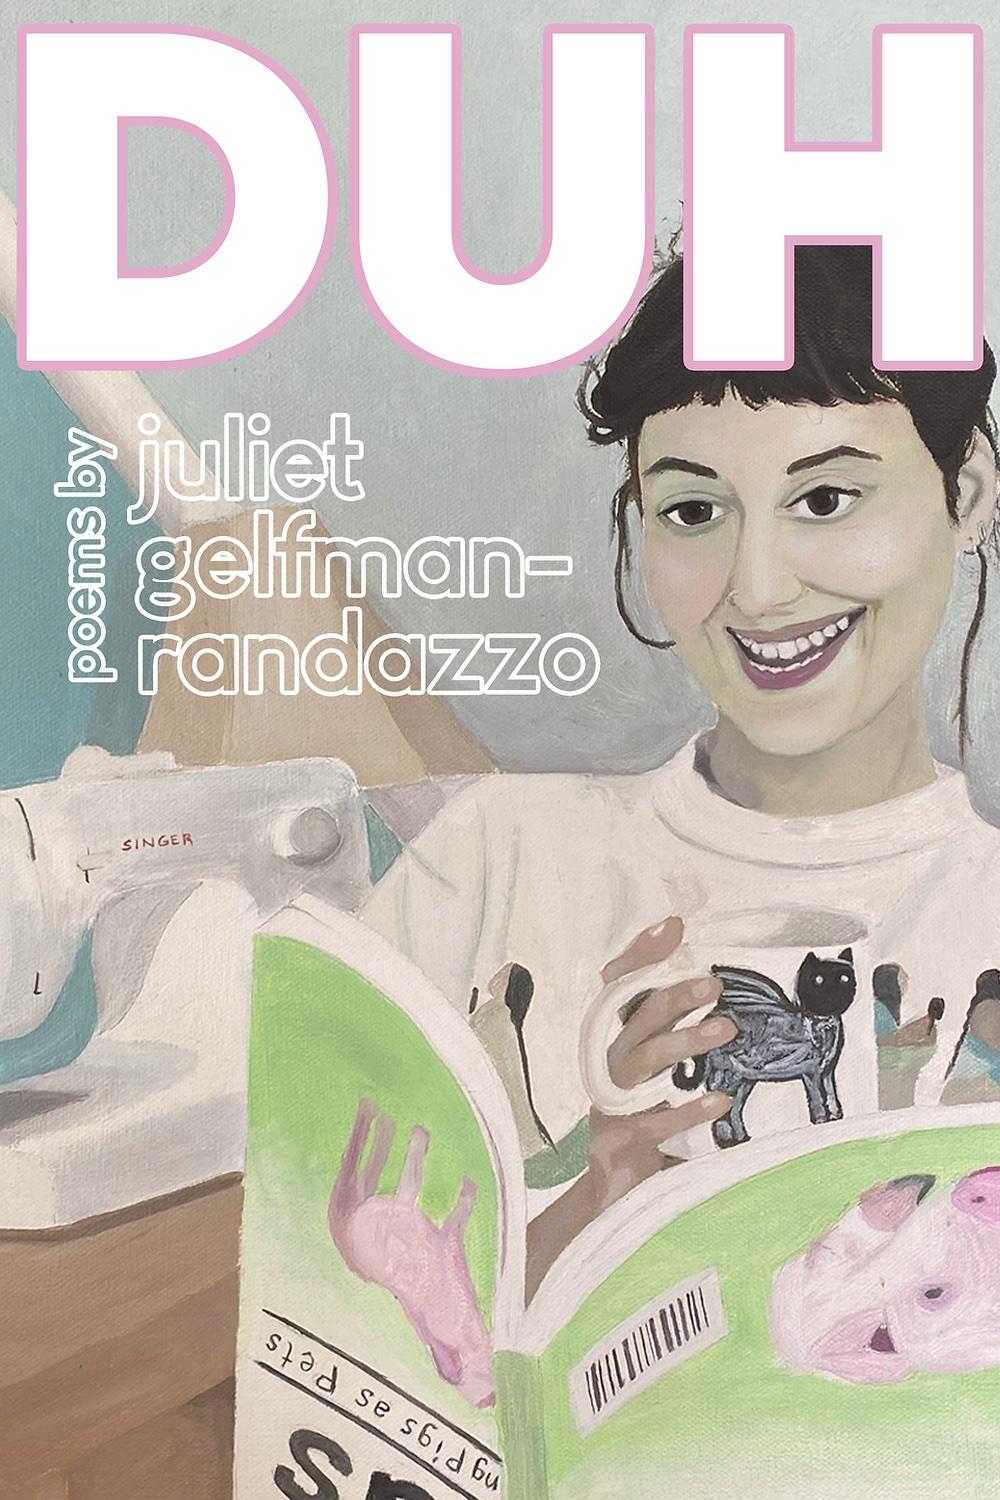 Book cover of DUH by Juliet Gelfman-Randazzo